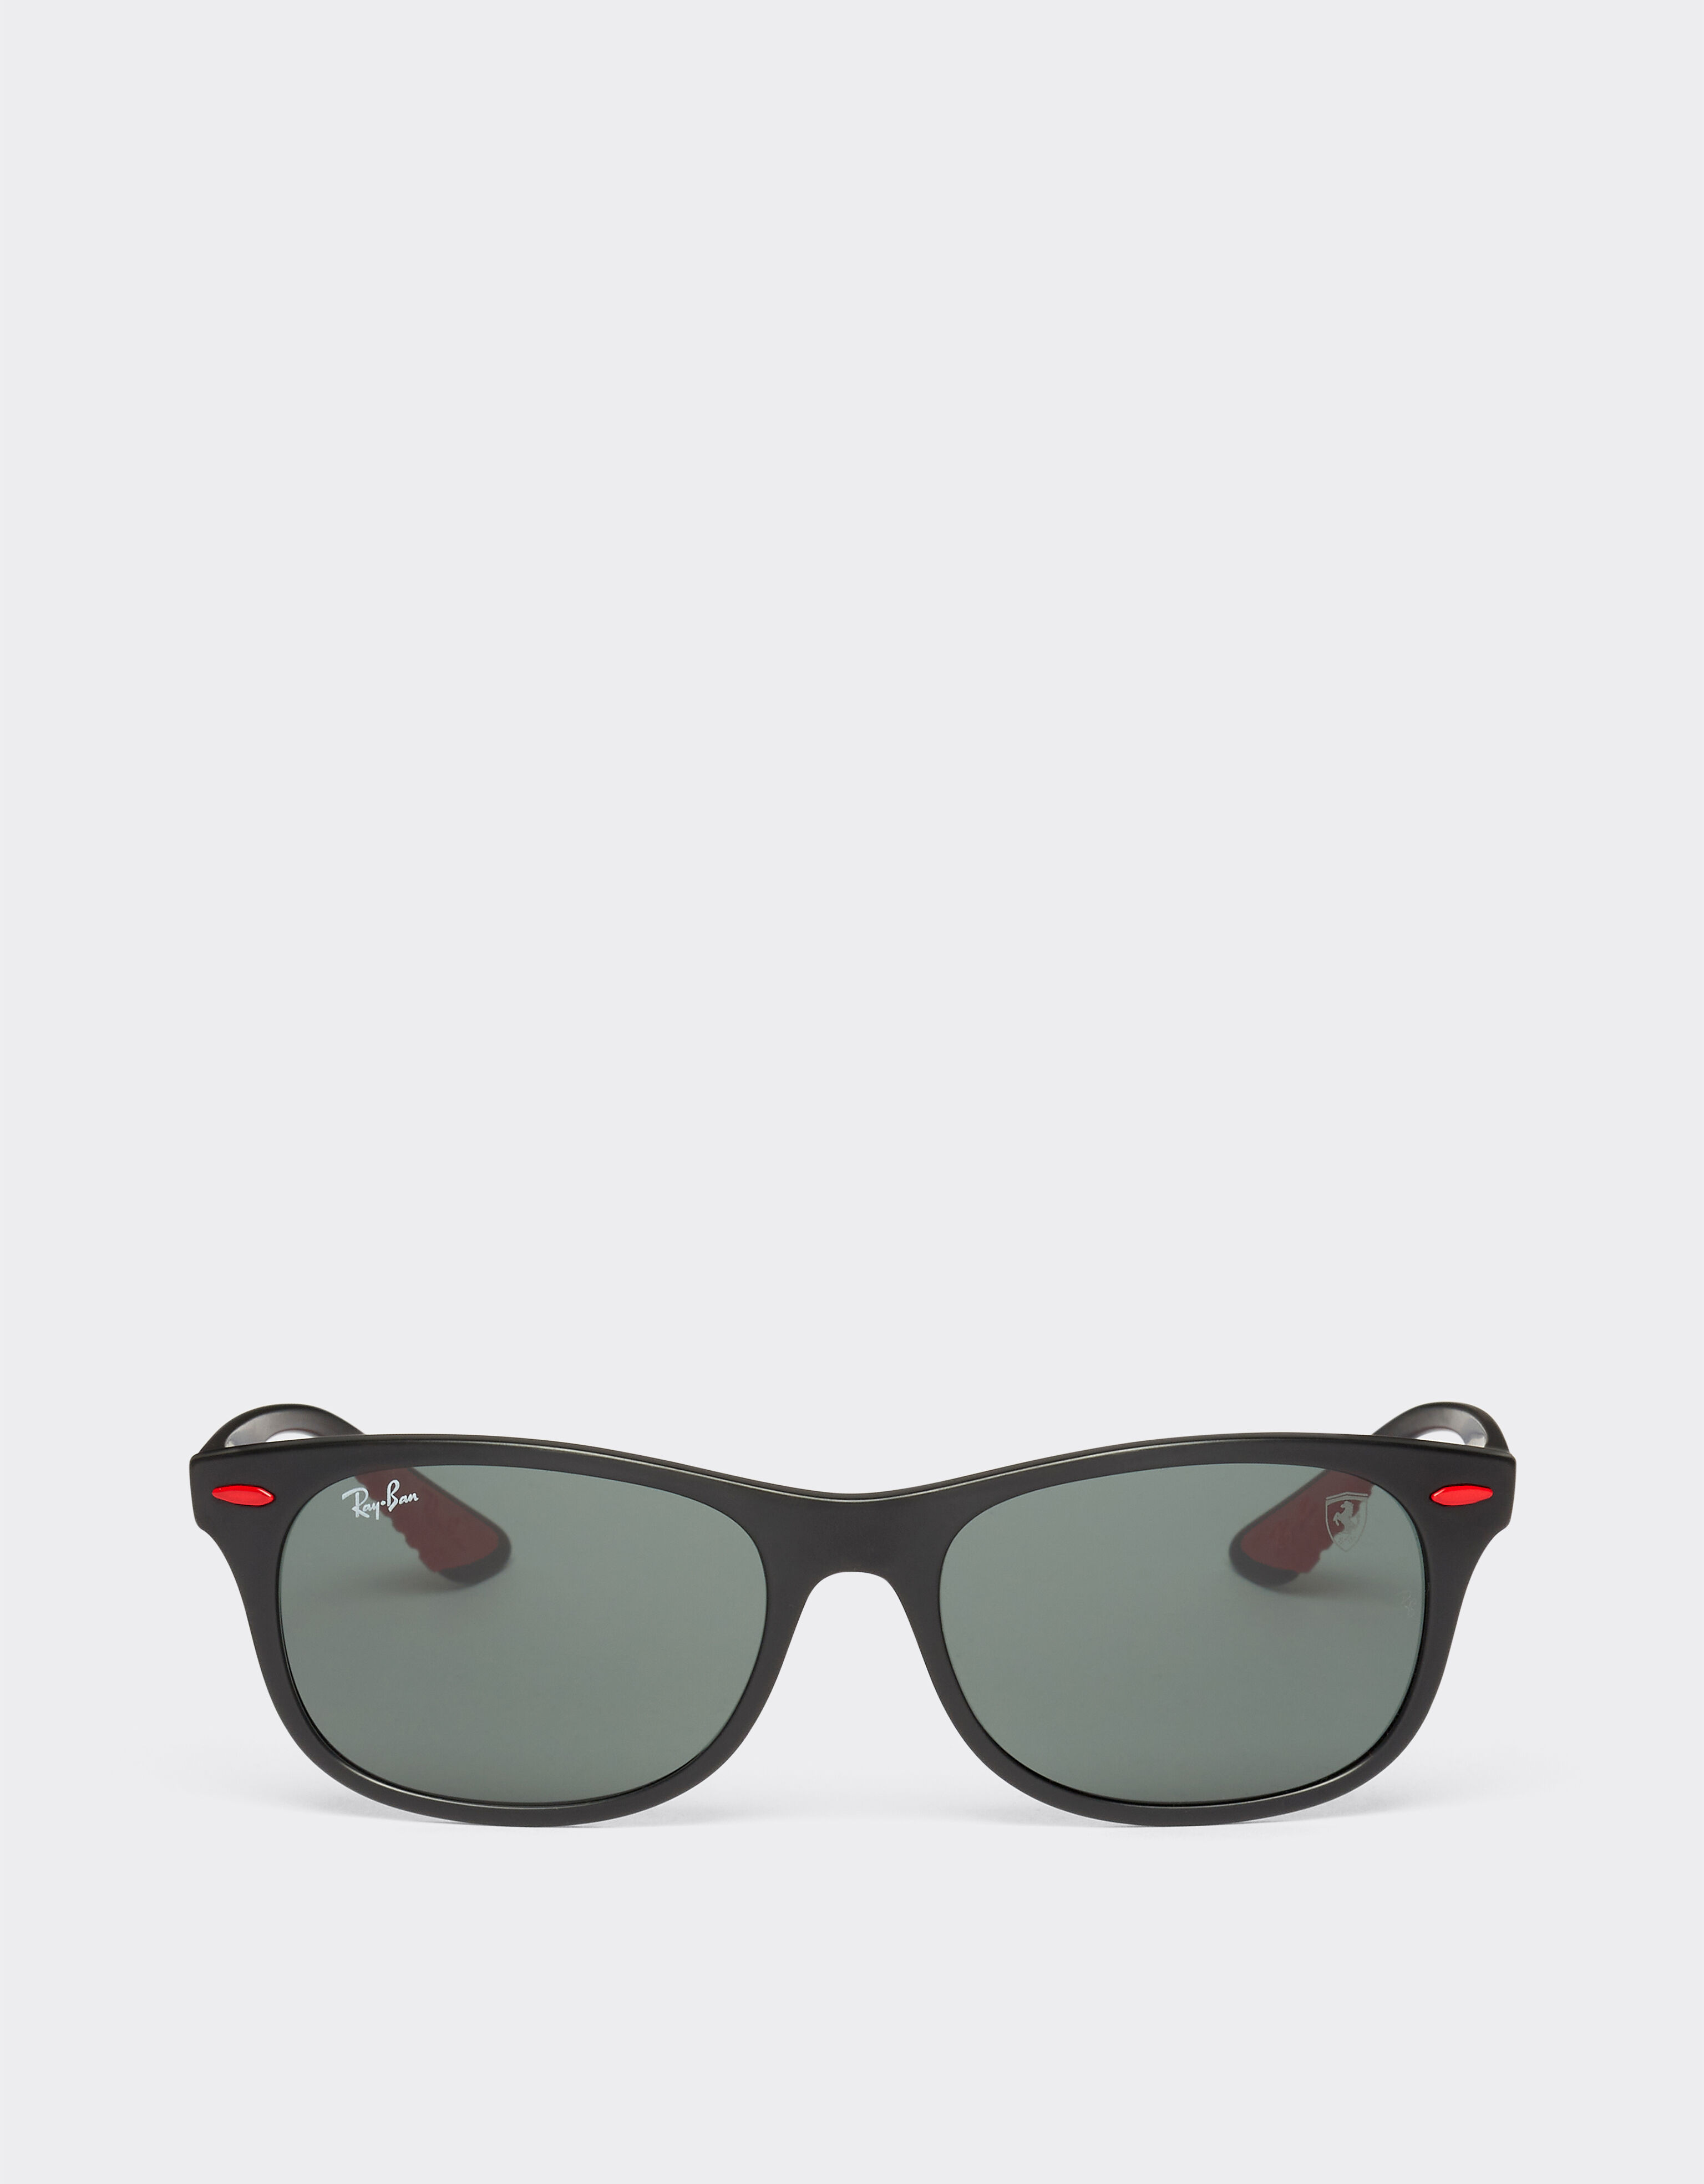 Ferrari Ray-Ban for Scuderia Ferrari 0RB4607M black sunglasses with dark green lenses Optical White F1258f